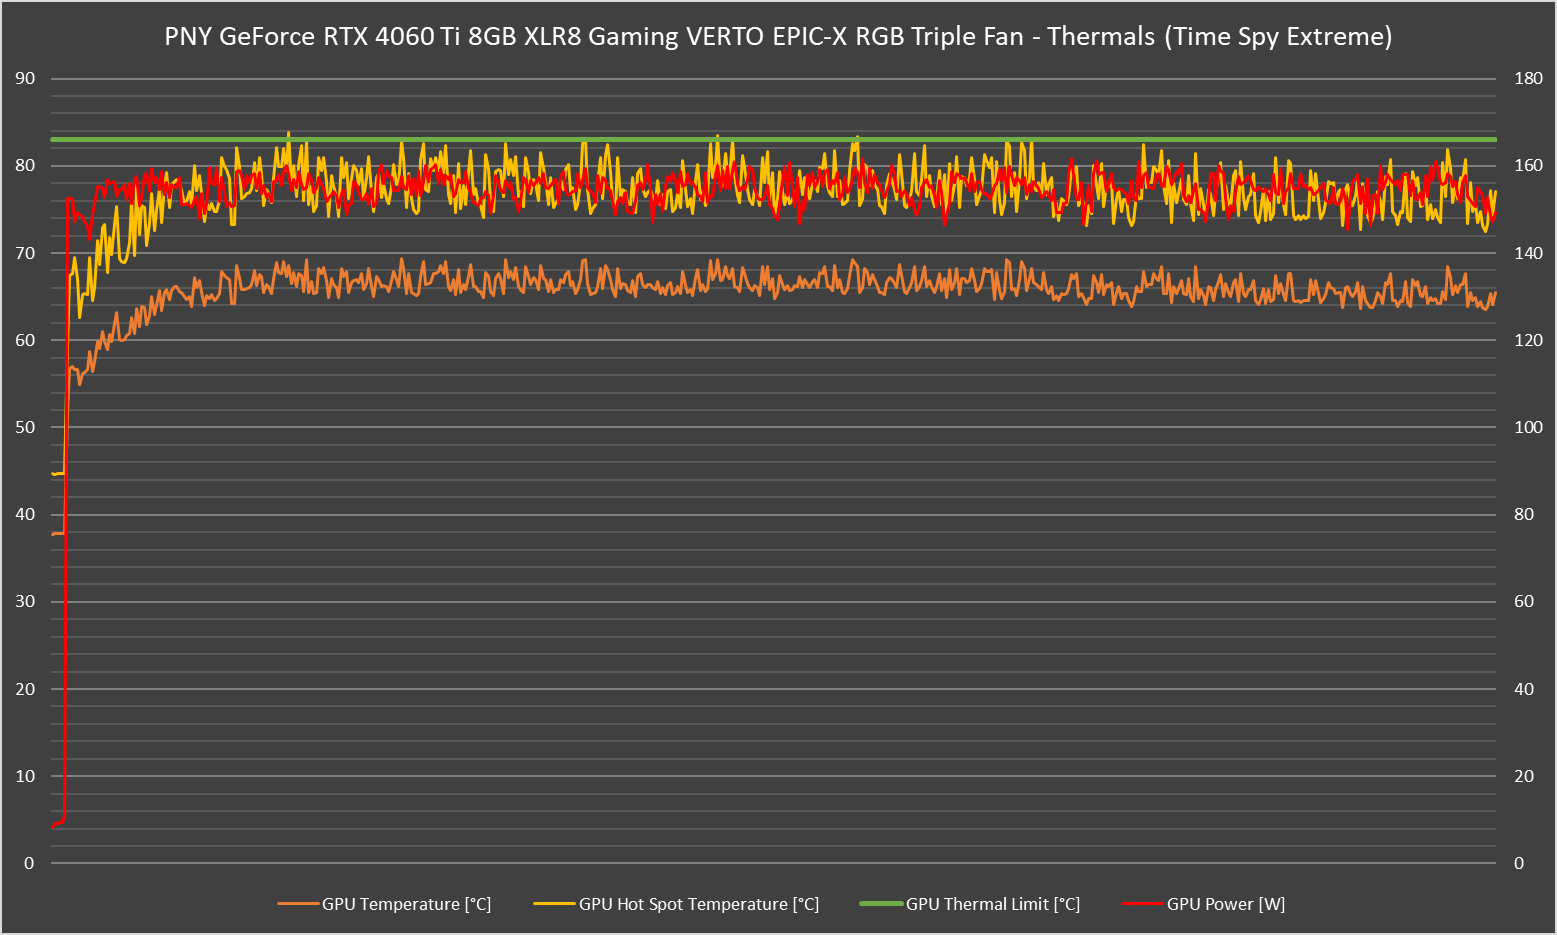 PNY GeForce RTX 4060 Ti Verto Review - Average FPS